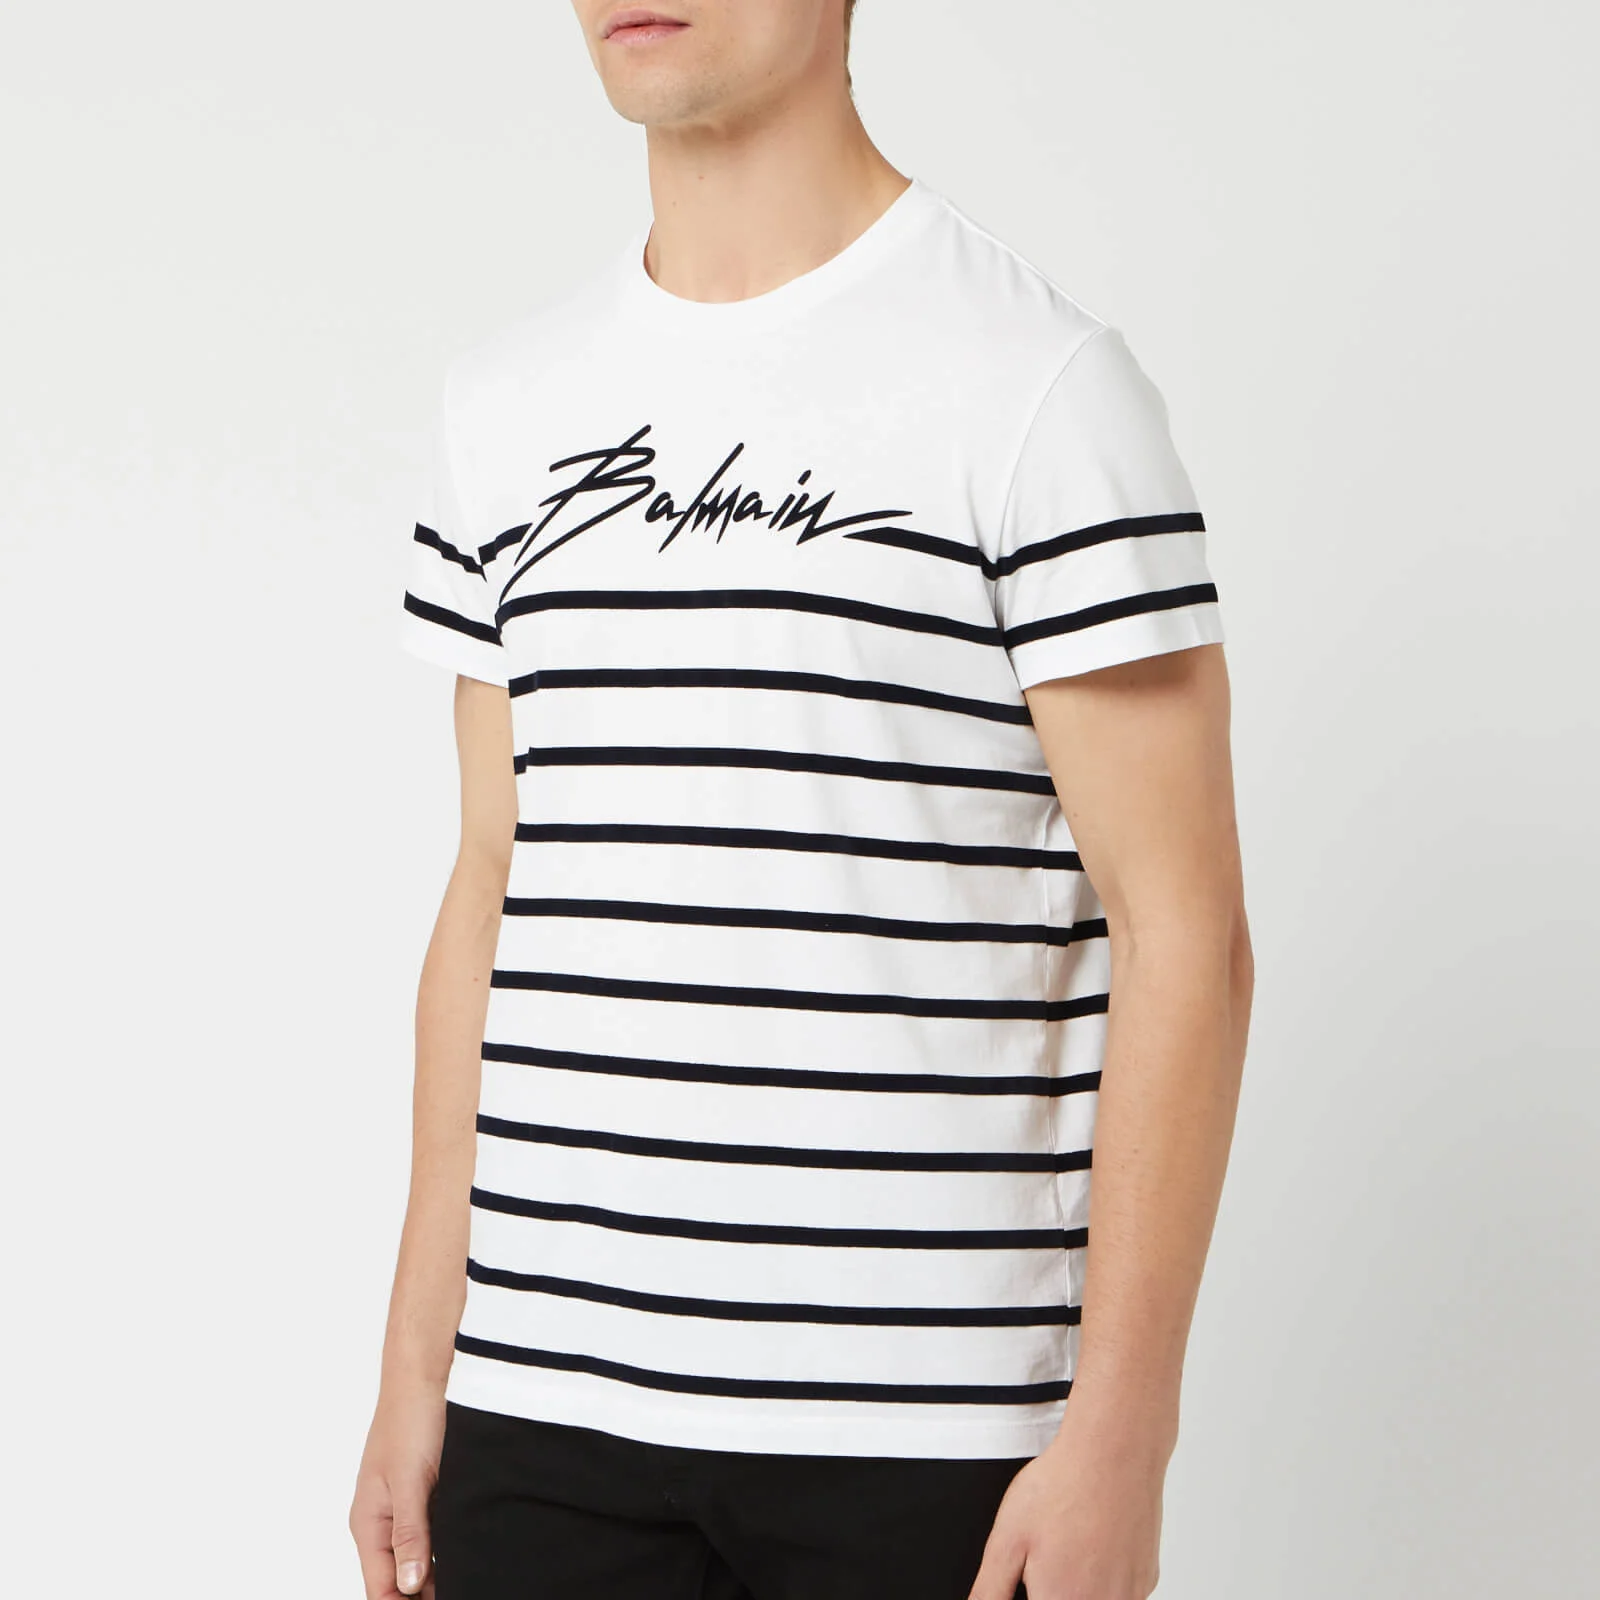 Balmain Men's Signature Striped T-Shirt - Blanc/Noir Image 1